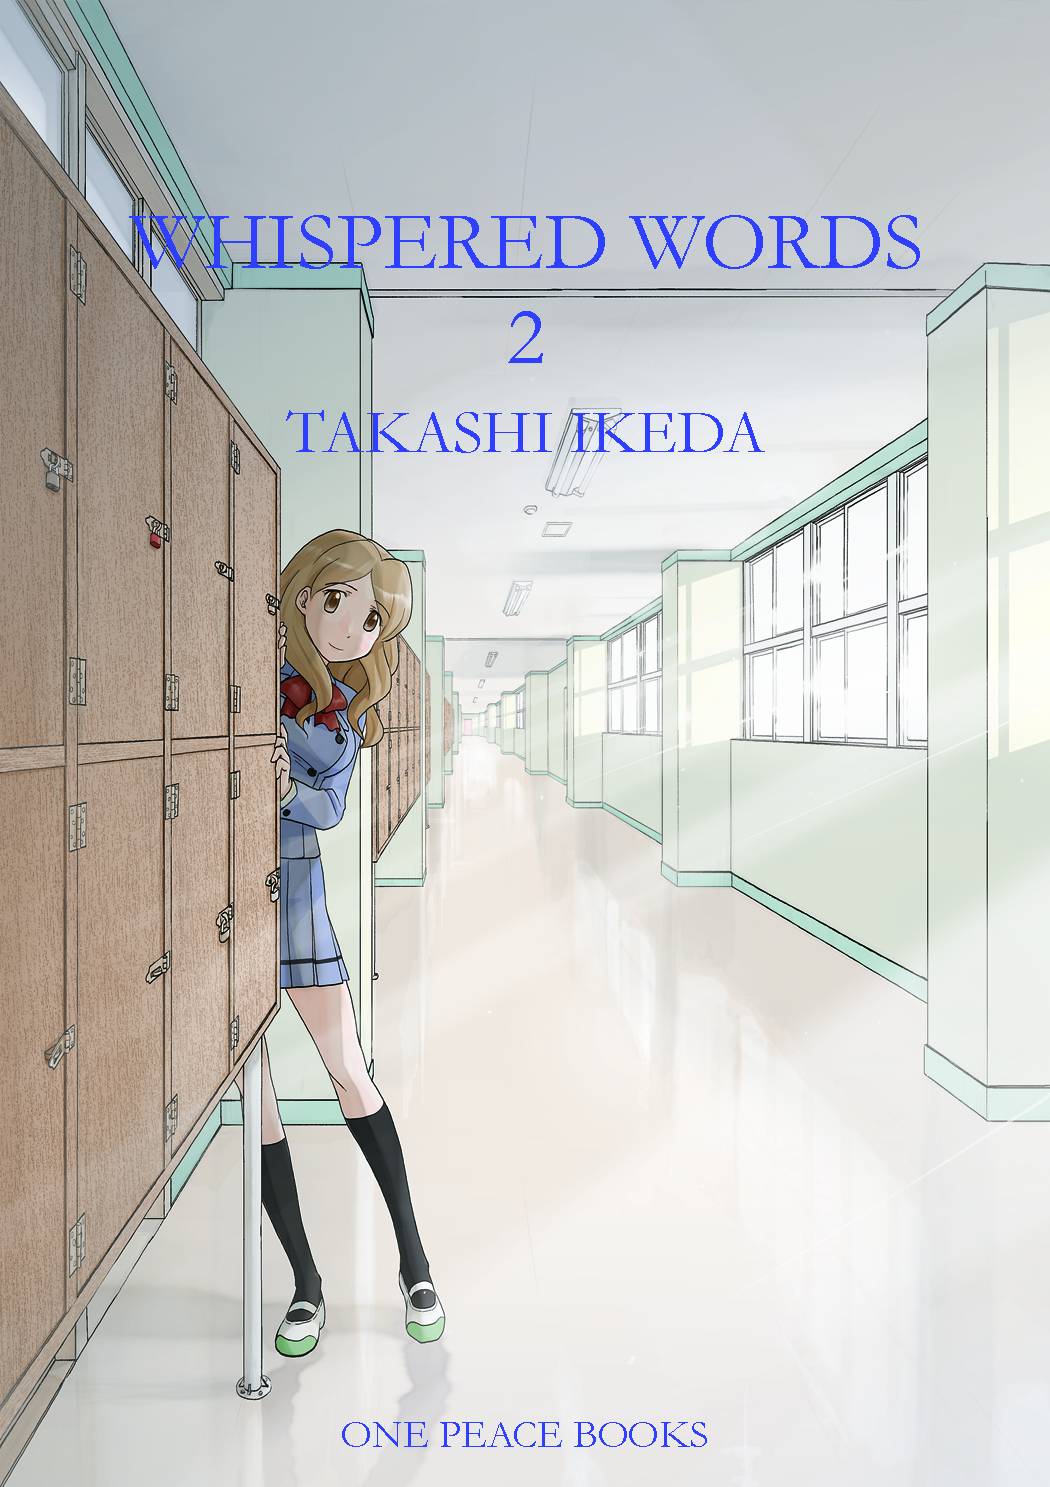 Whispered Words Vol 2 Fresh Comics